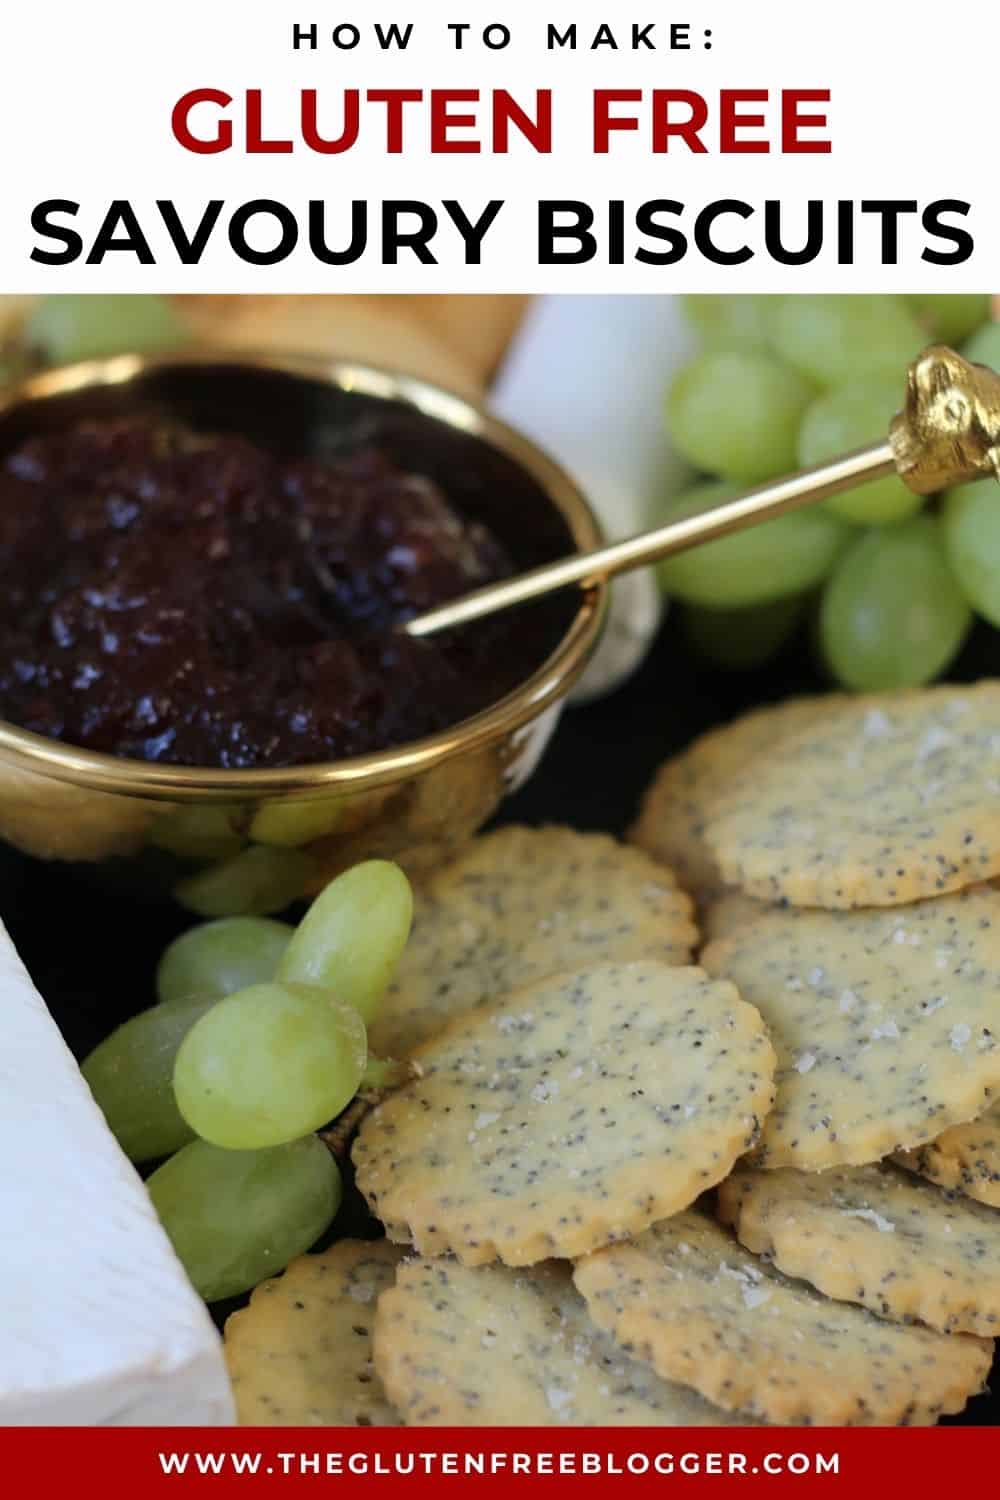 Gluten free savoury biscuits - cheese crackers 